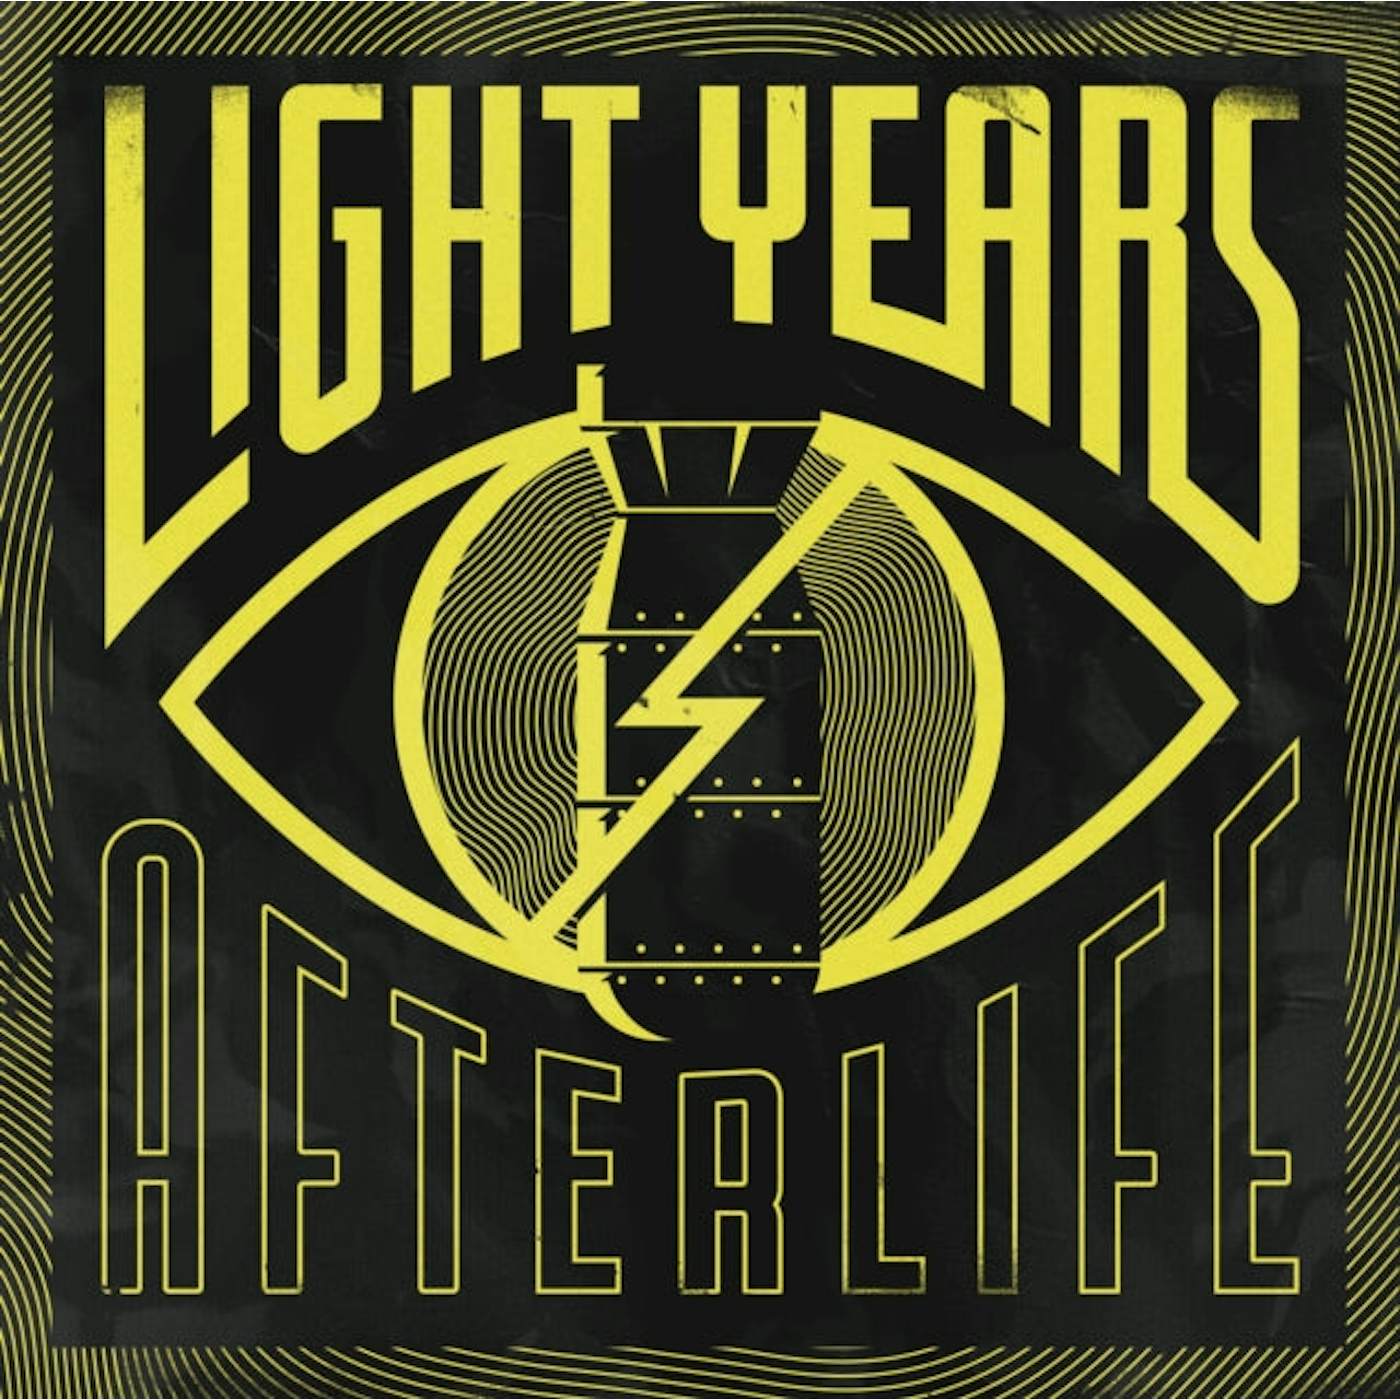 Light Years LP - Afterlife (Vinyl)